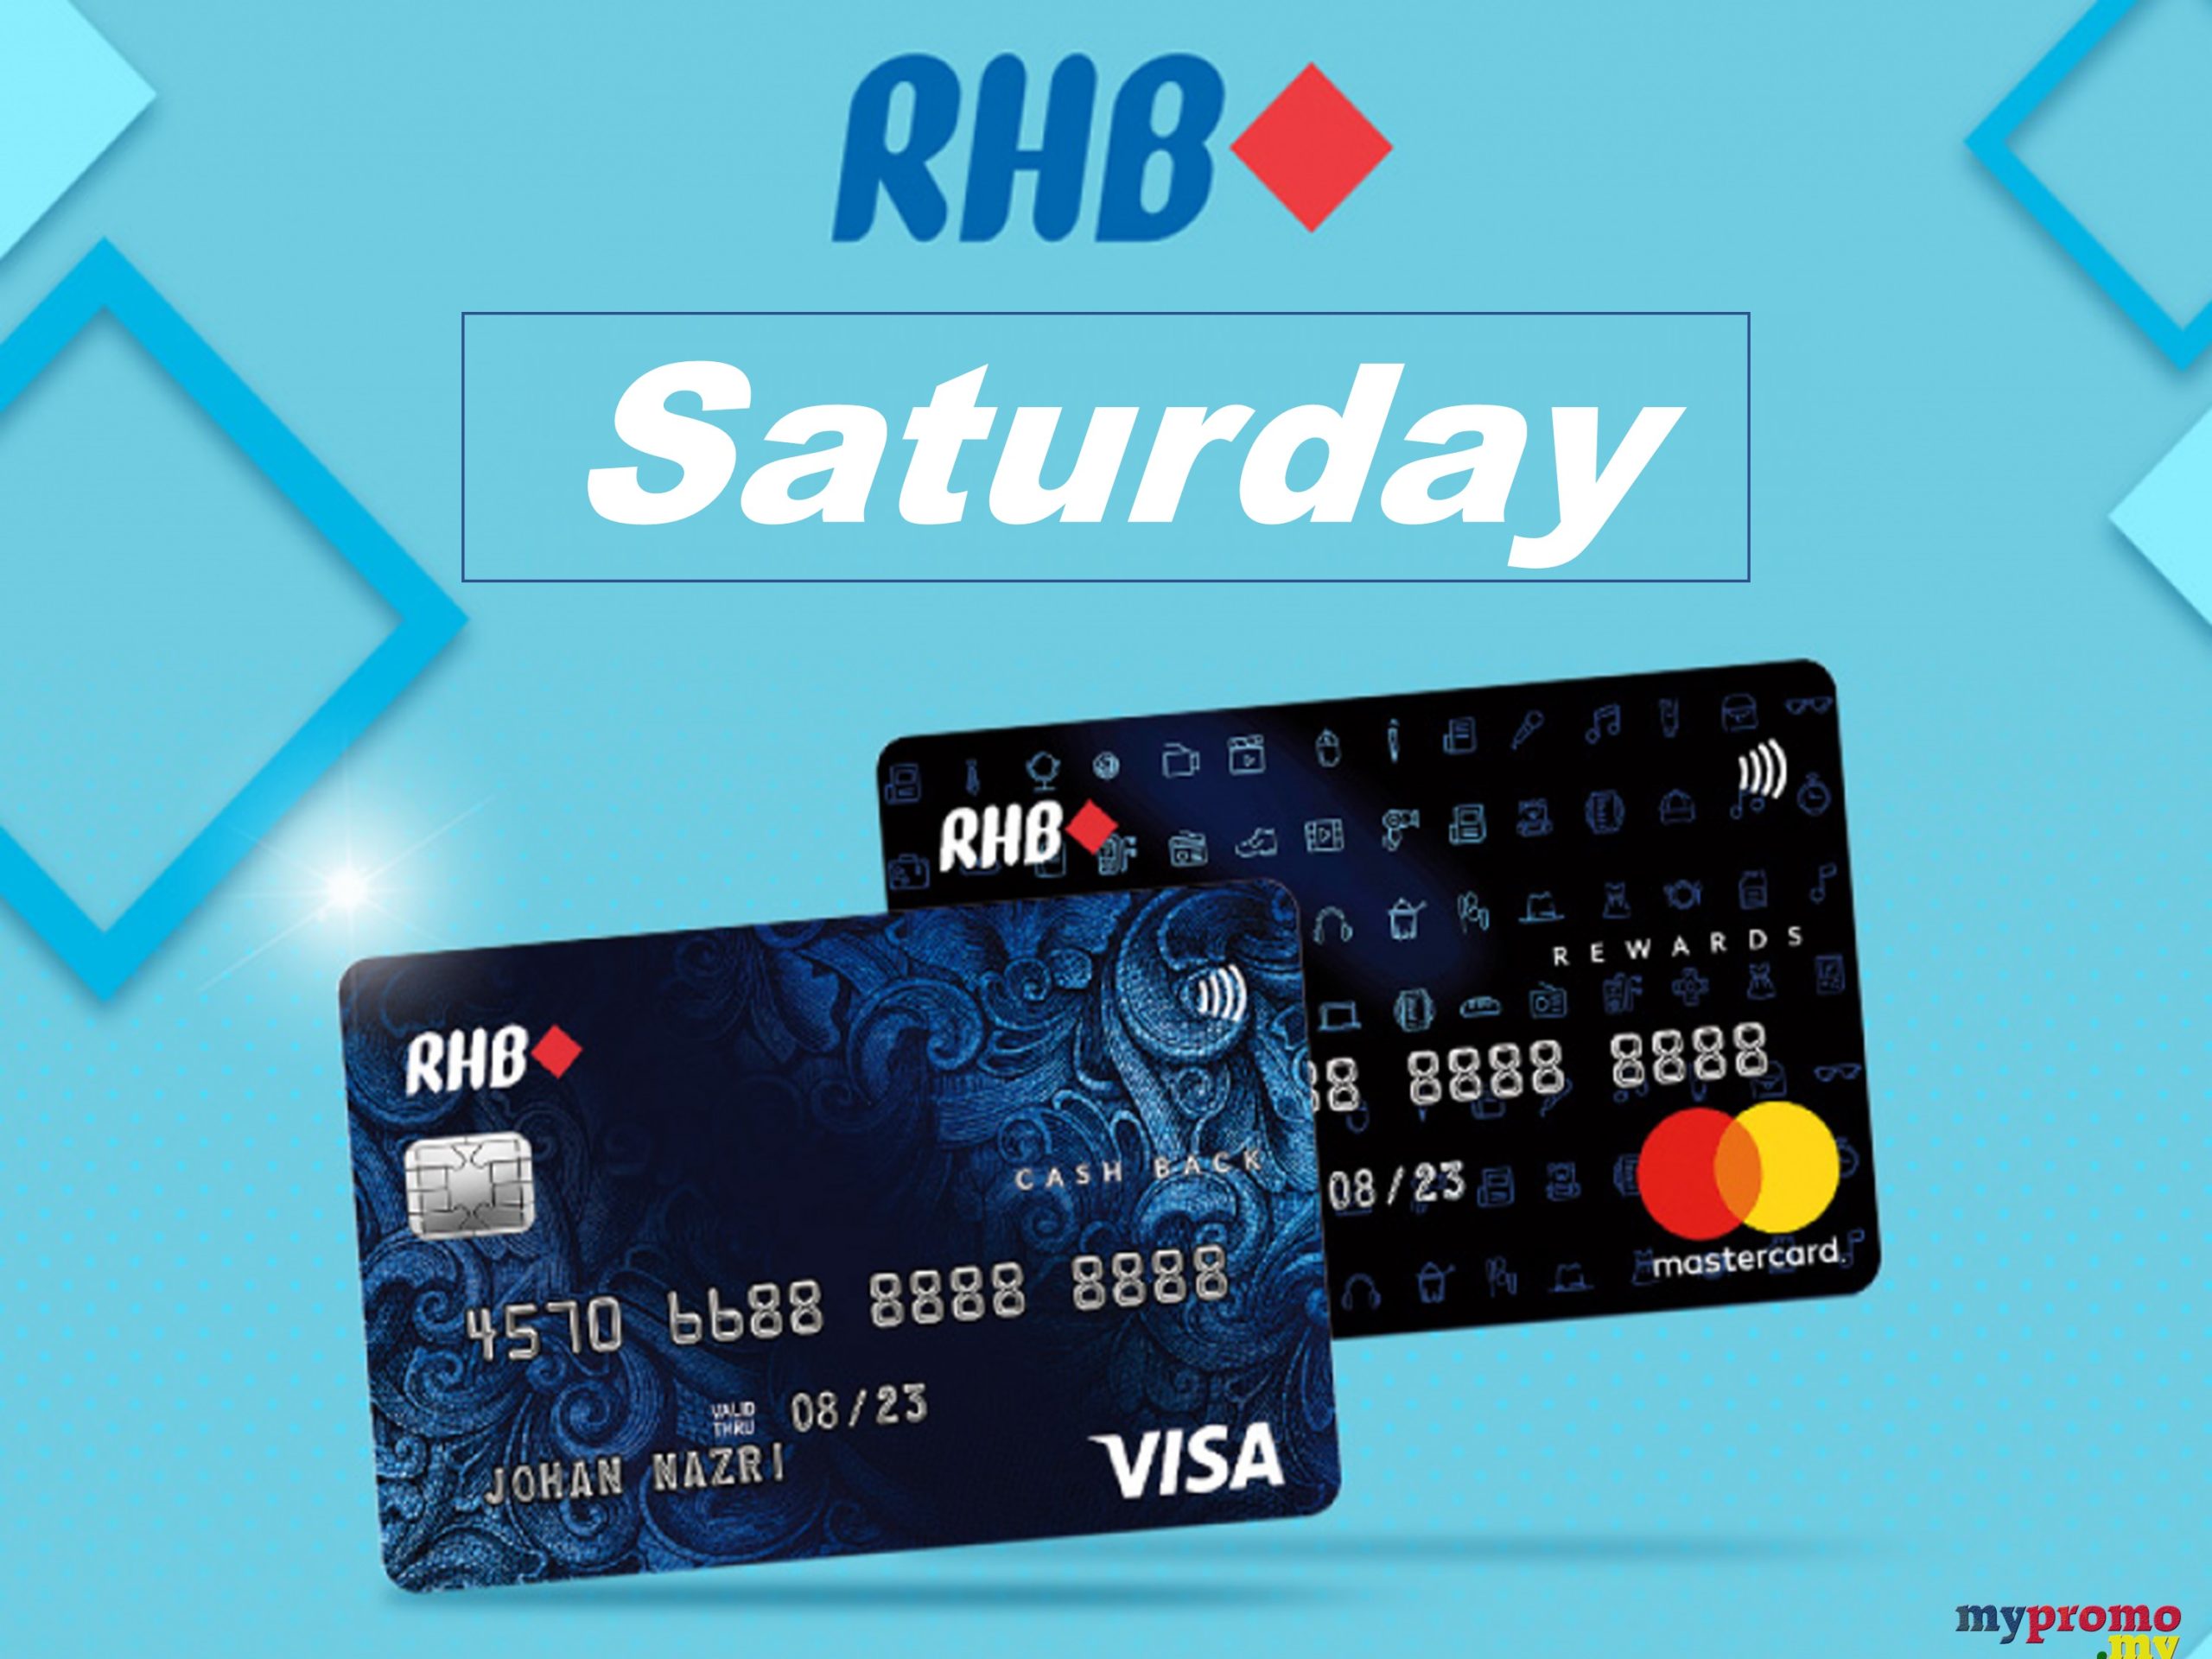 Rhb debit card